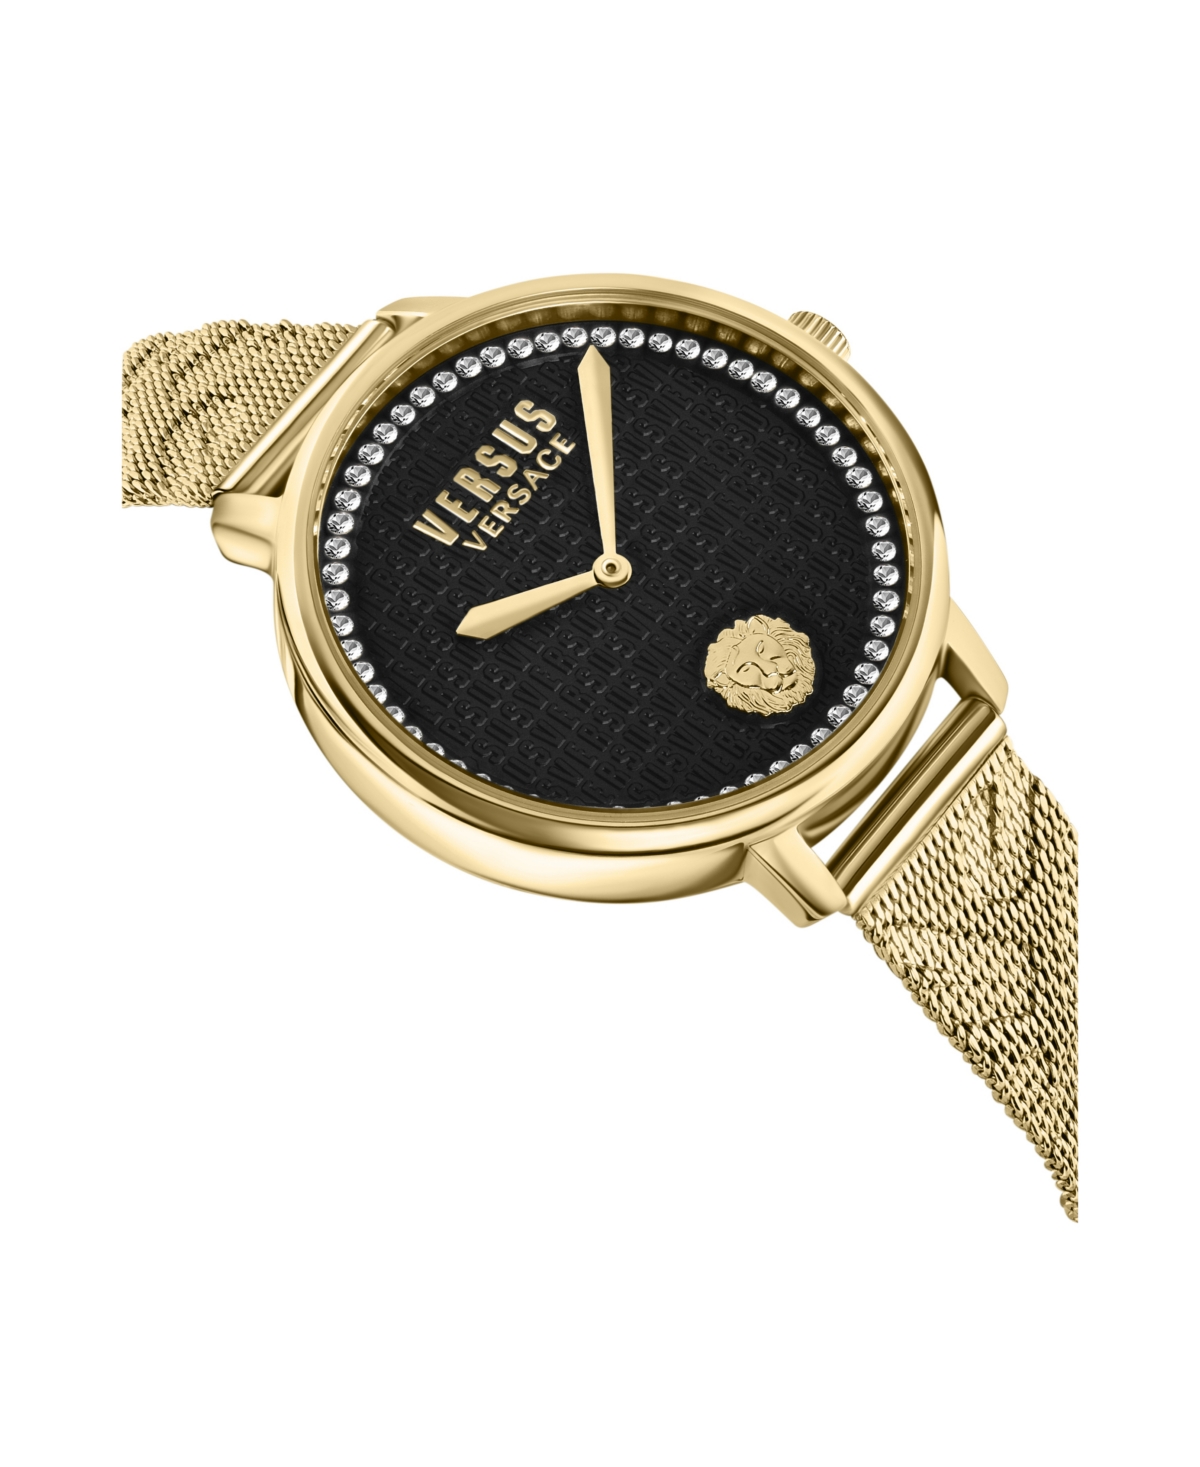 Shop Versus Women's La Villette Crystal Ip Yellow Gold Stainless Steel Watch 36mm